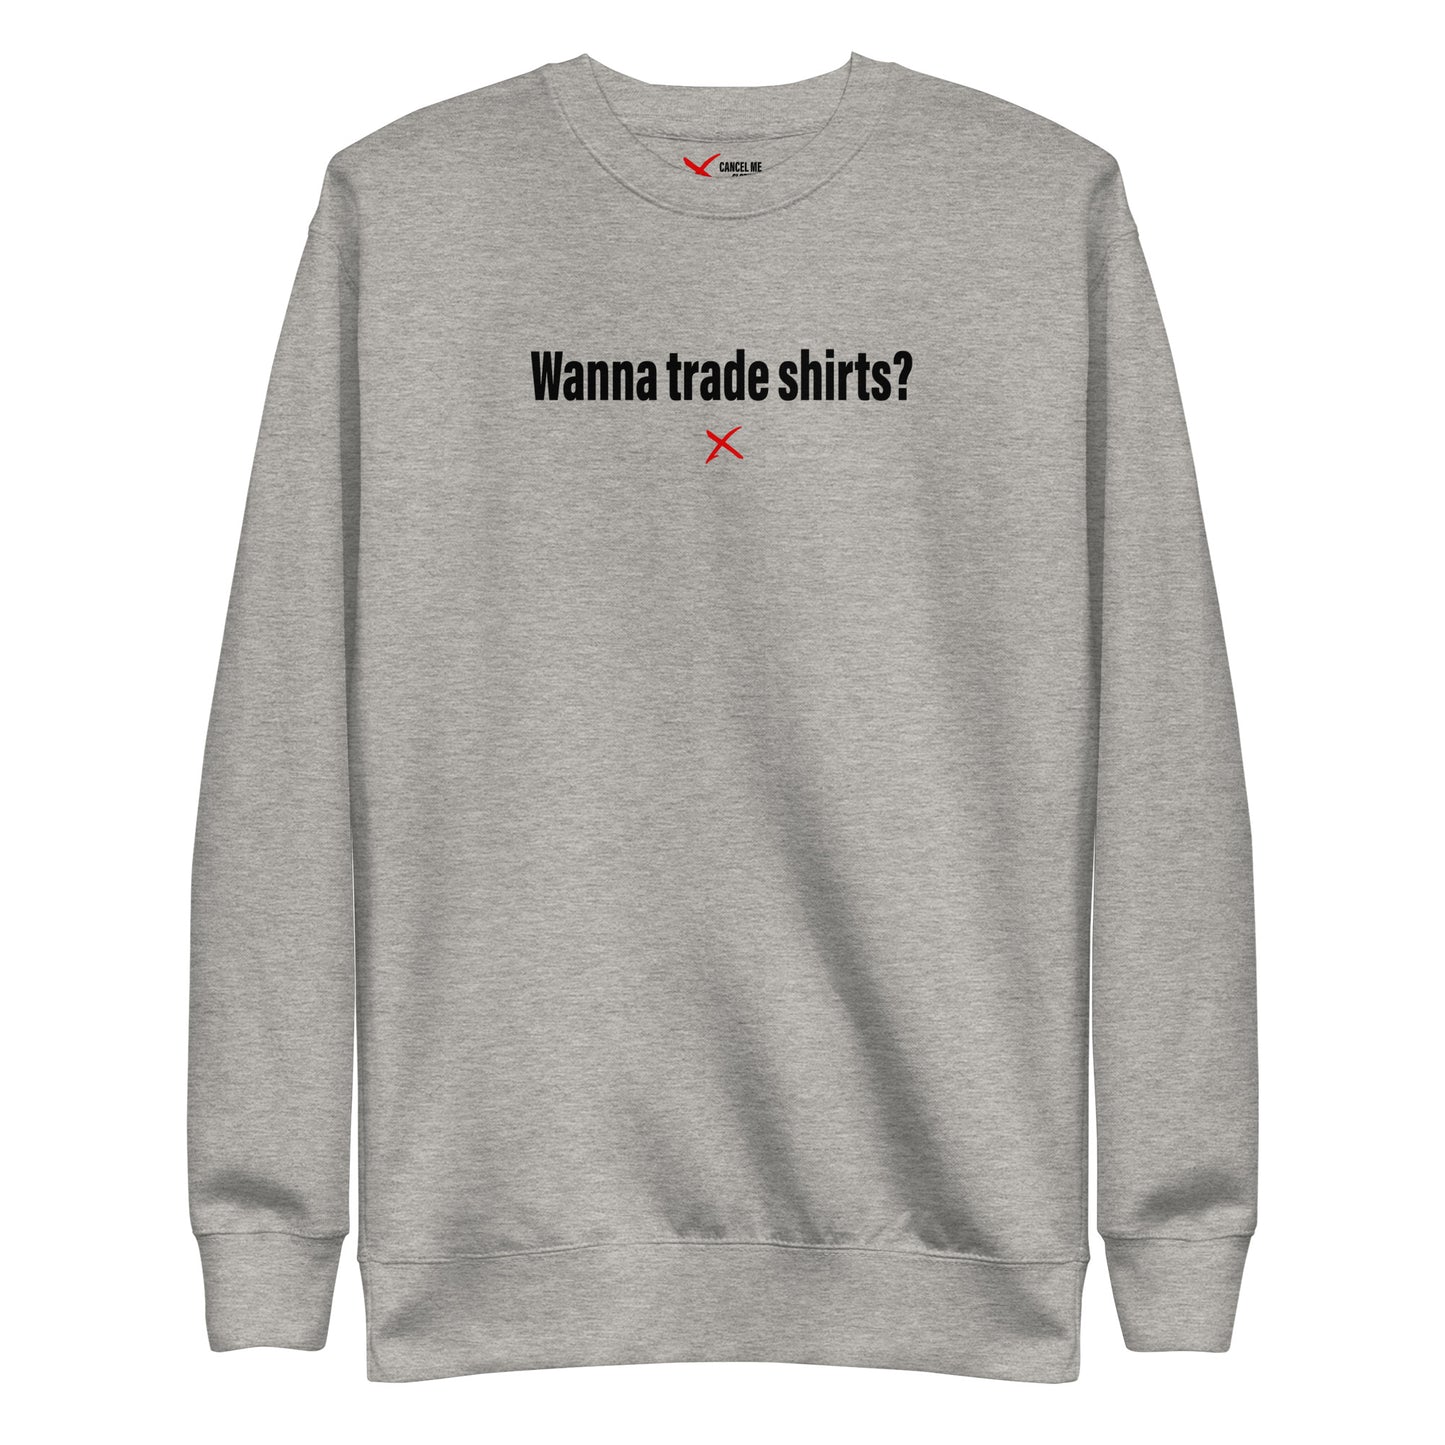 Wanna trade shirts? - Sweatshirt